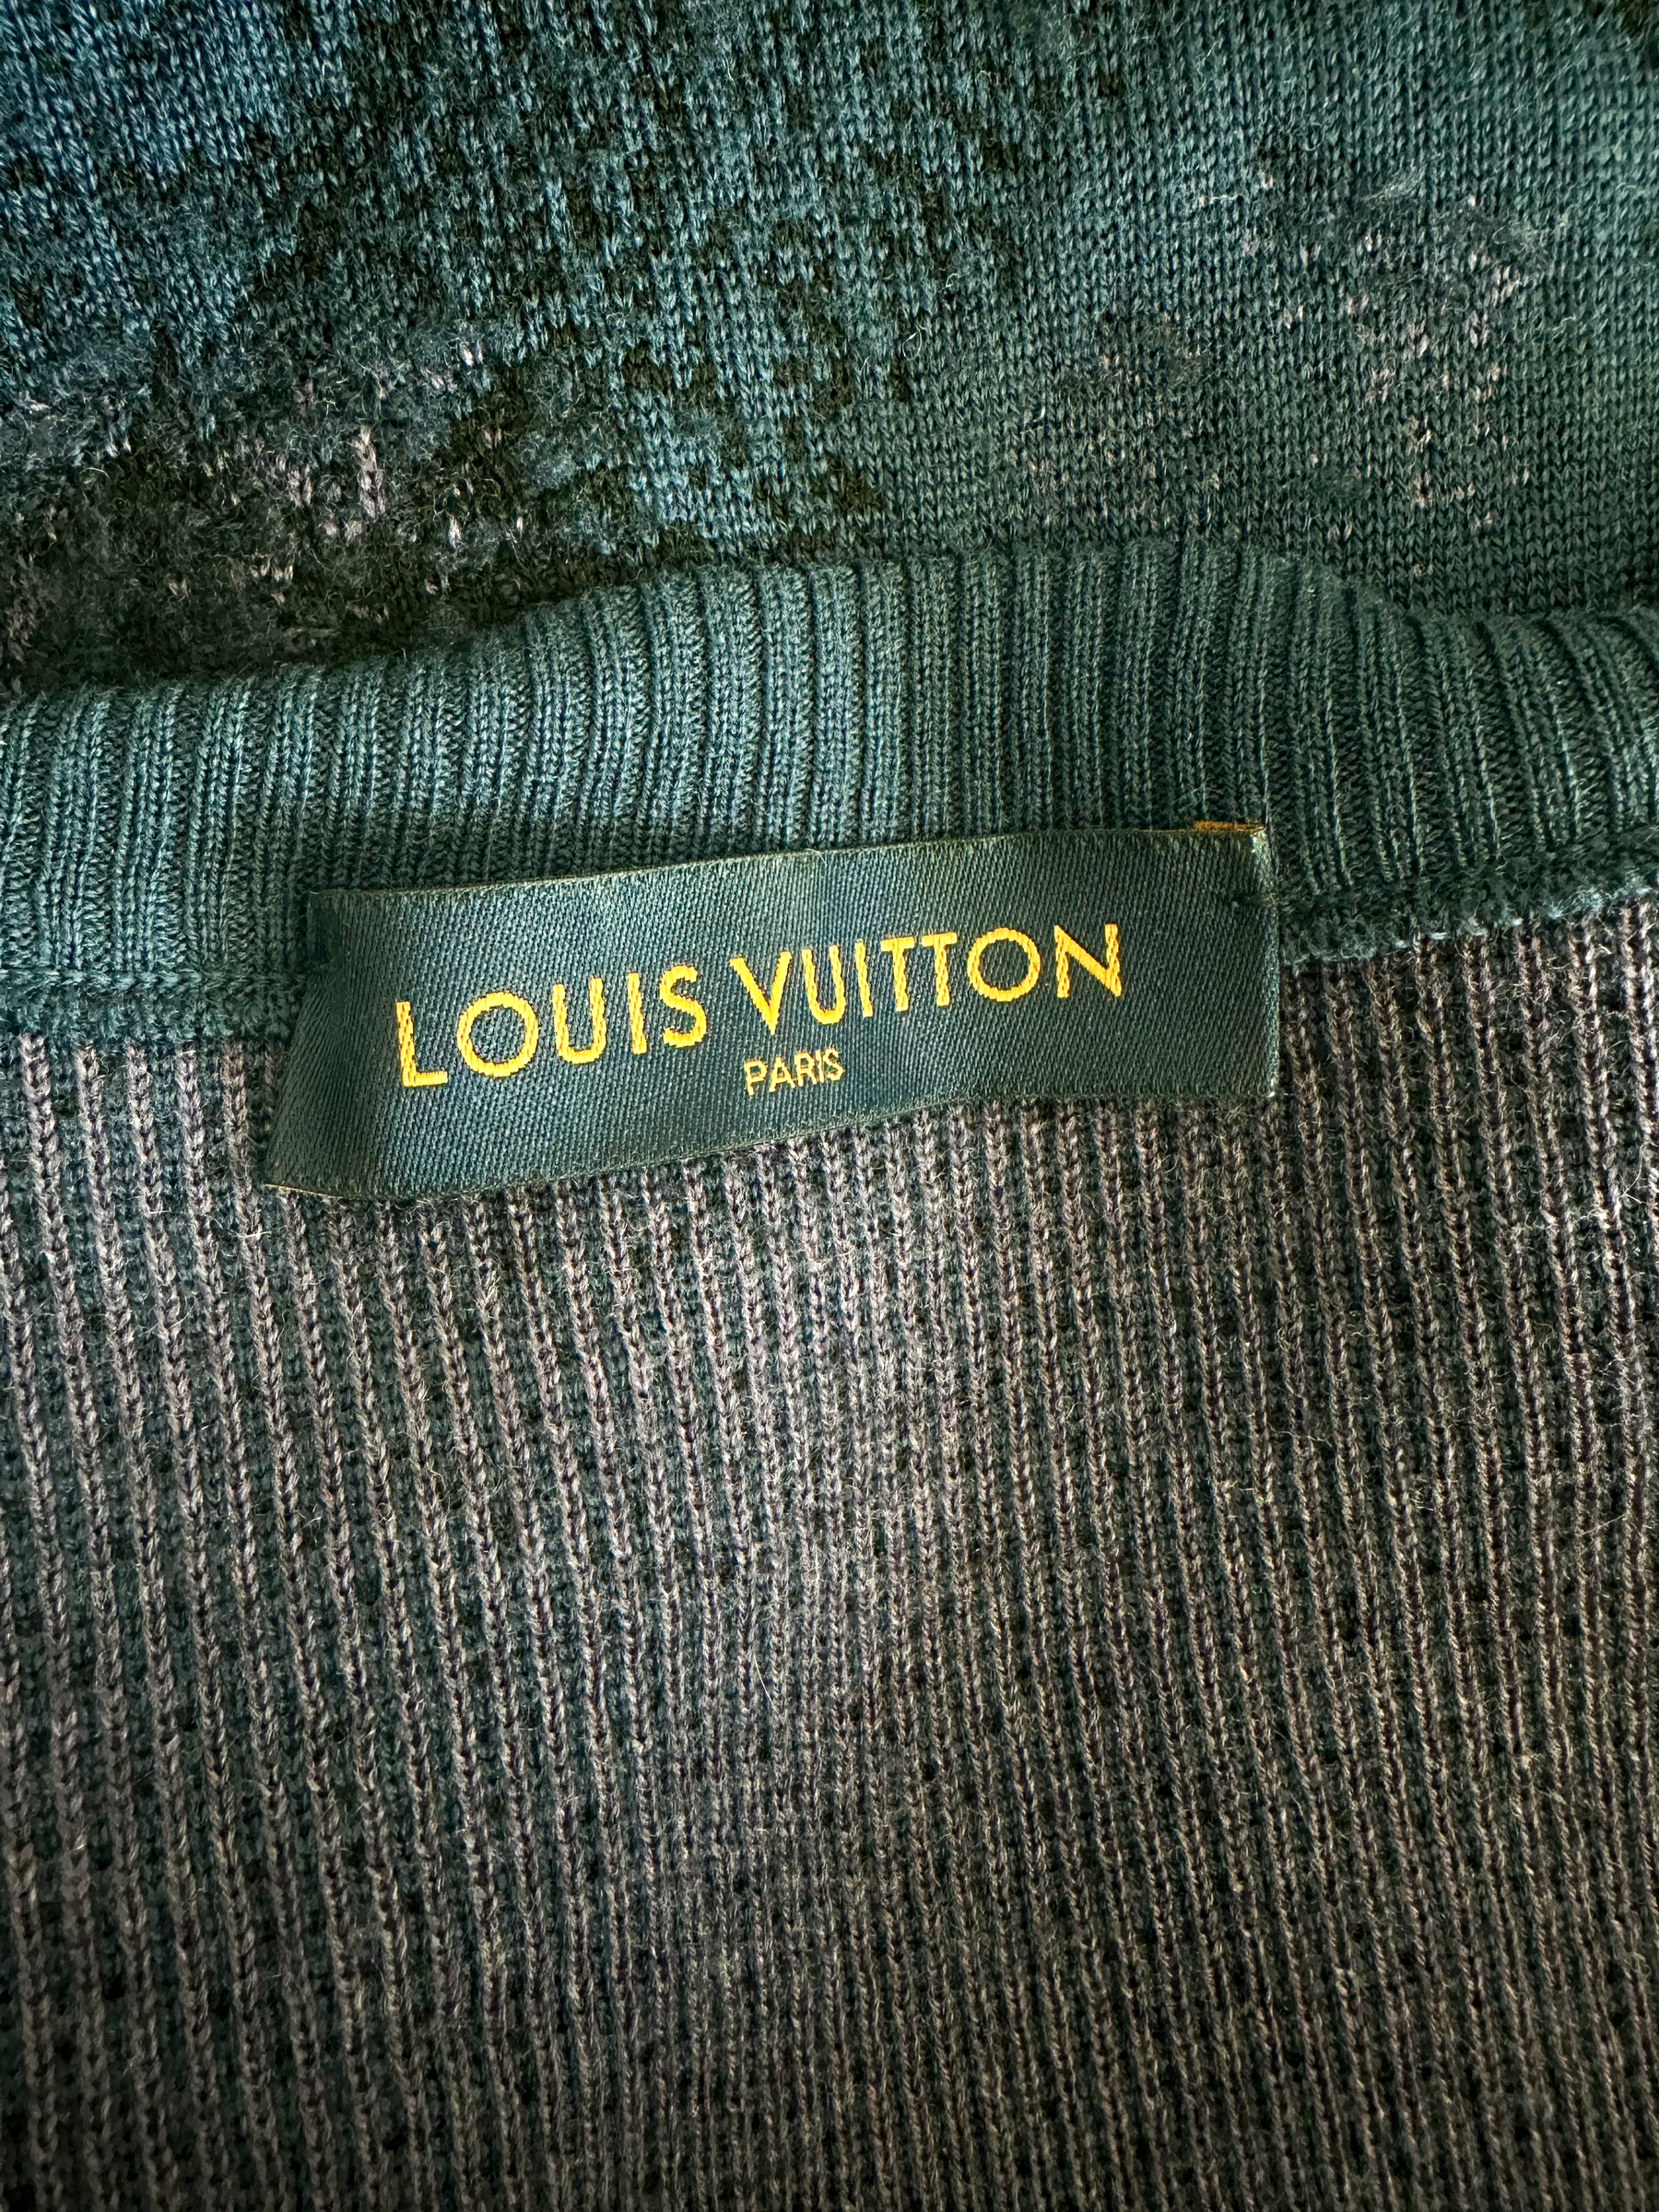 Louis Vuitton Wizard Of Oz Sweater Priced